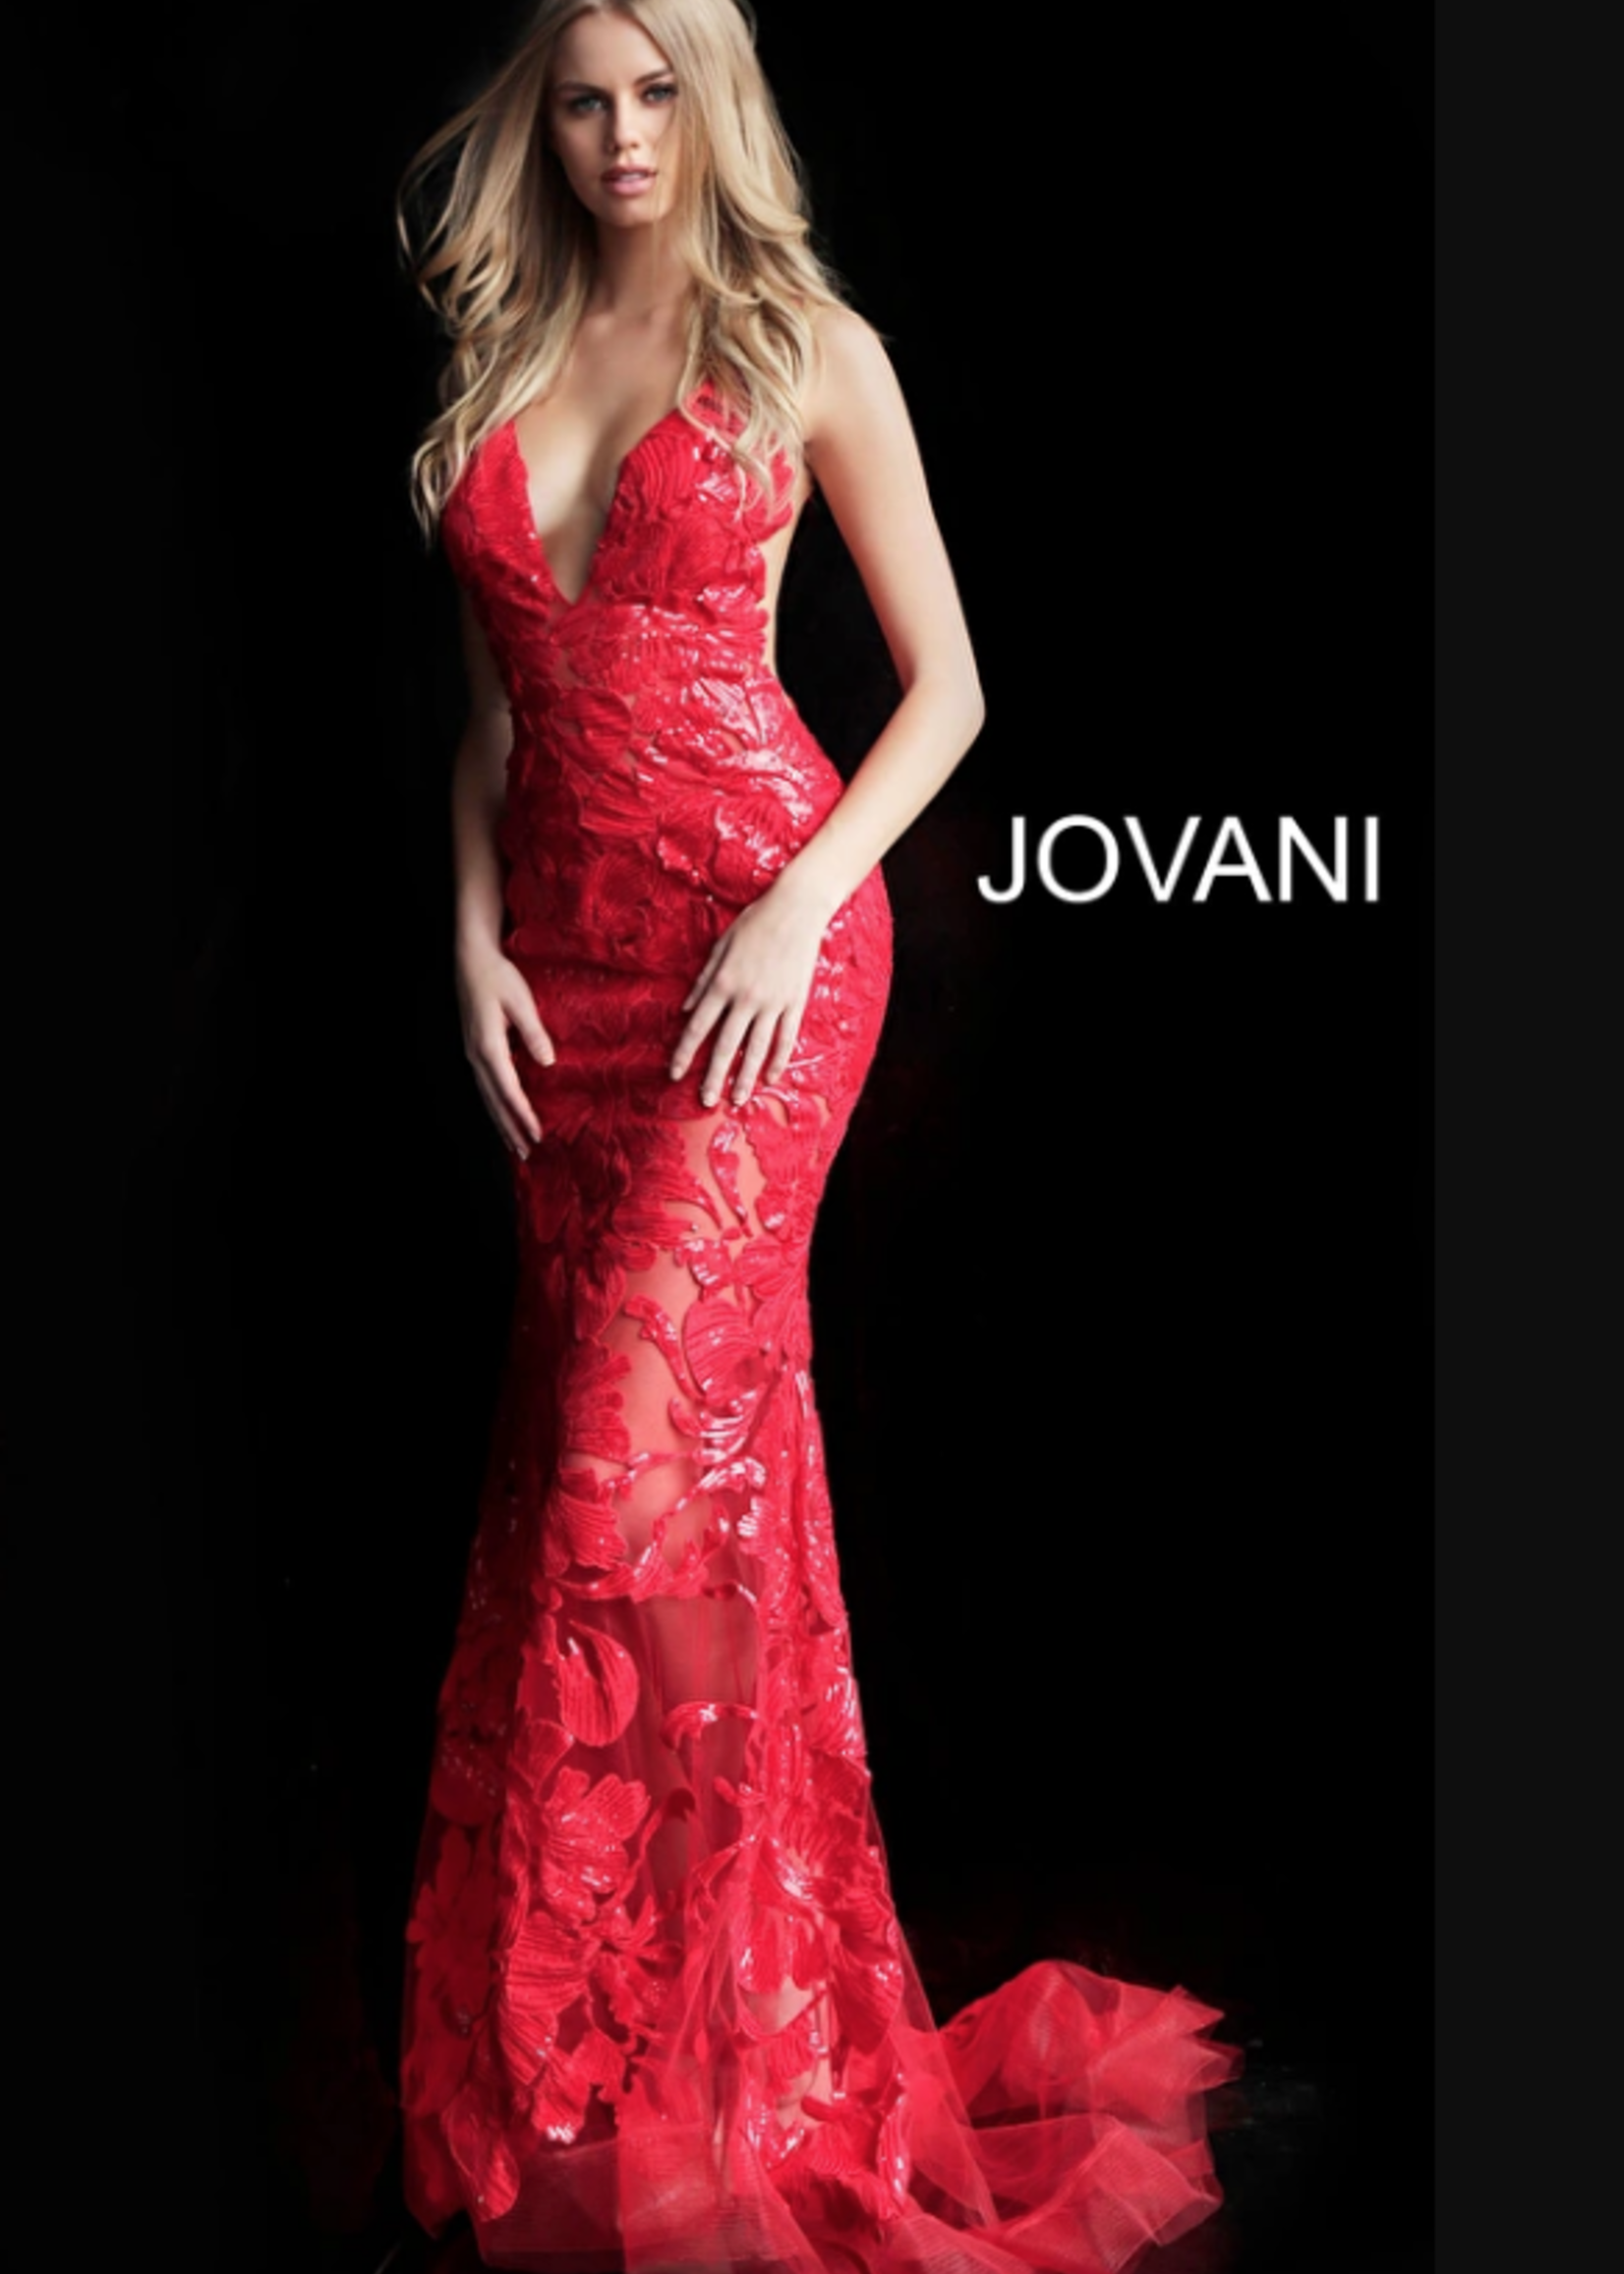 Jovani Wish Come True Floral Dress